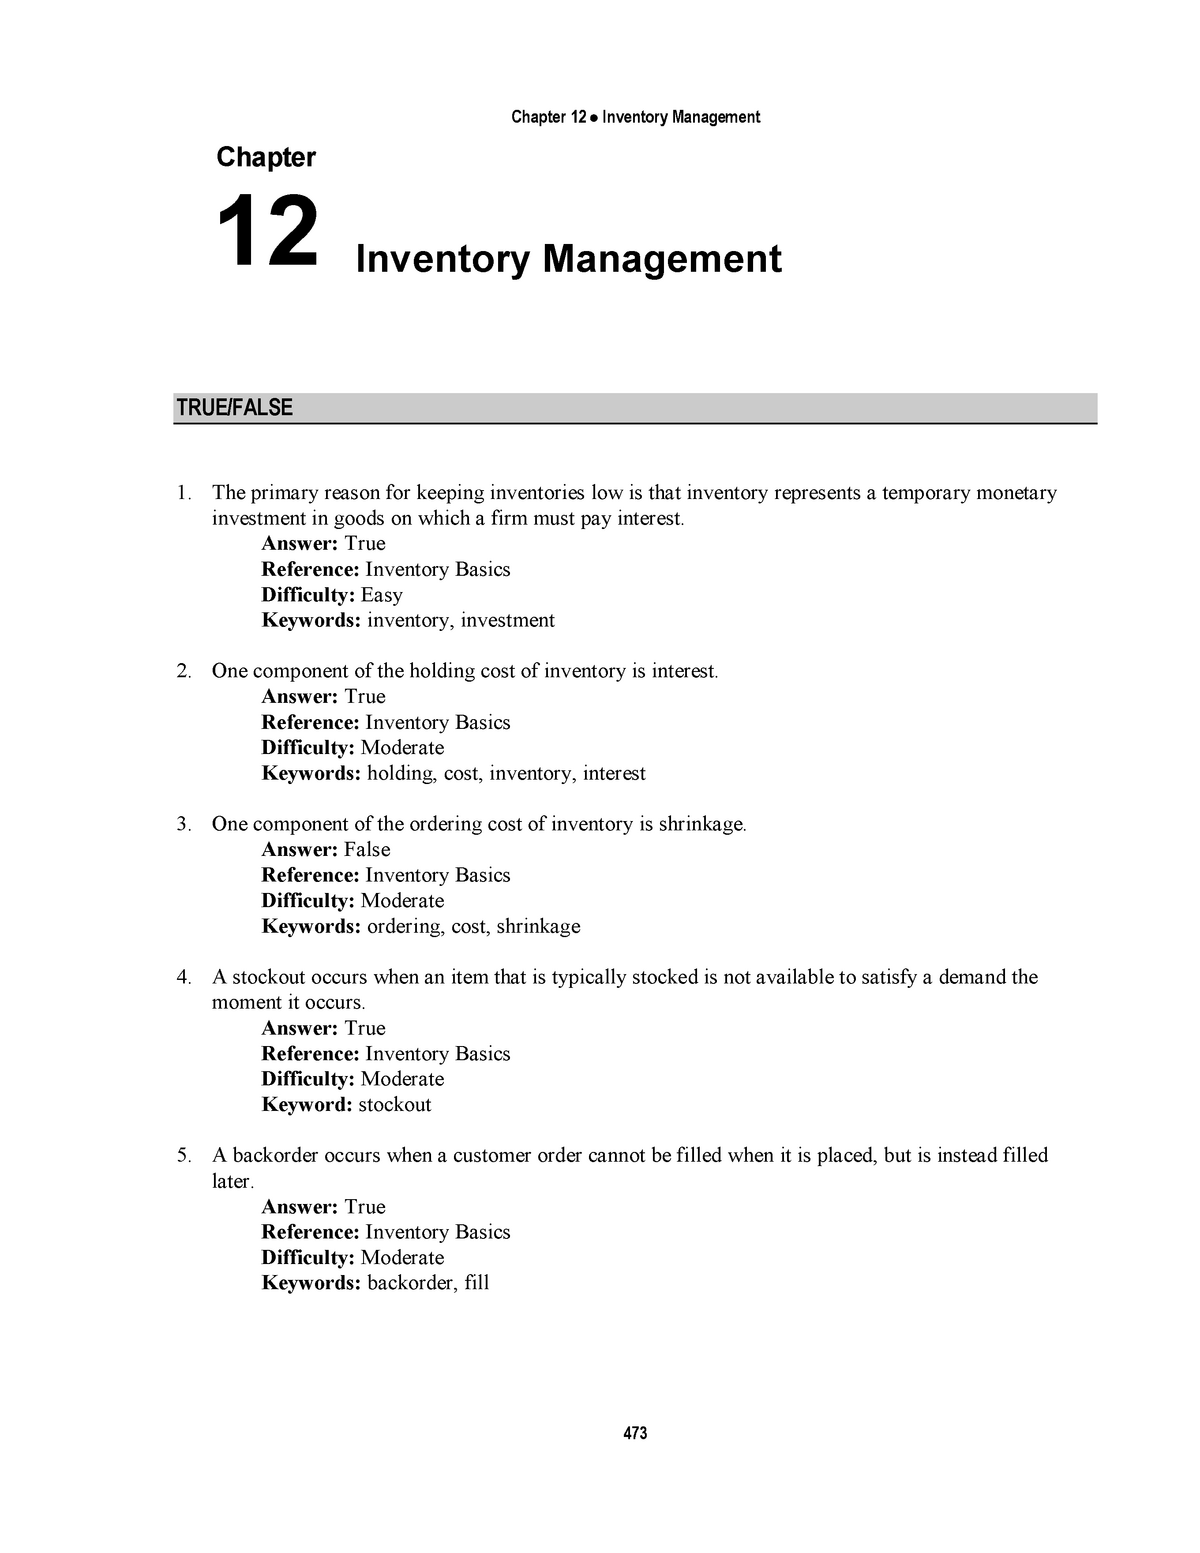 inventory management essay question